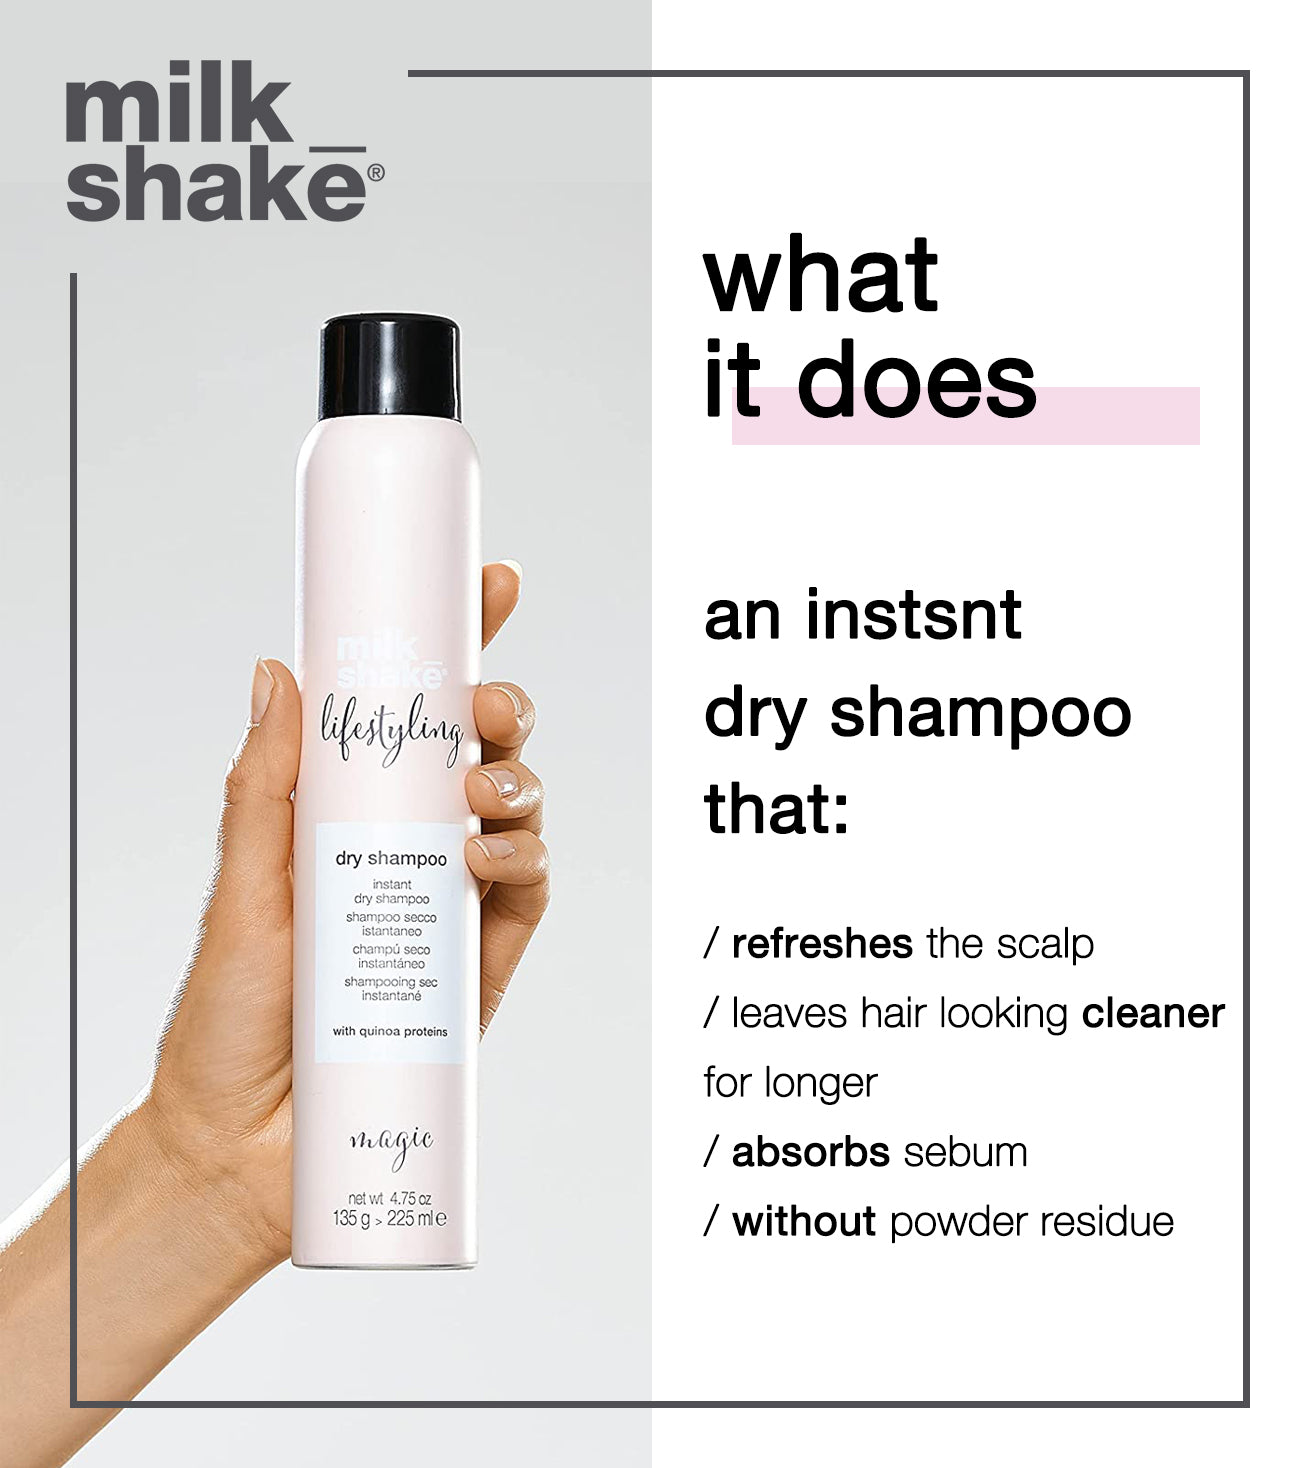 milk_shake lifestyling dry shampoo magic scent